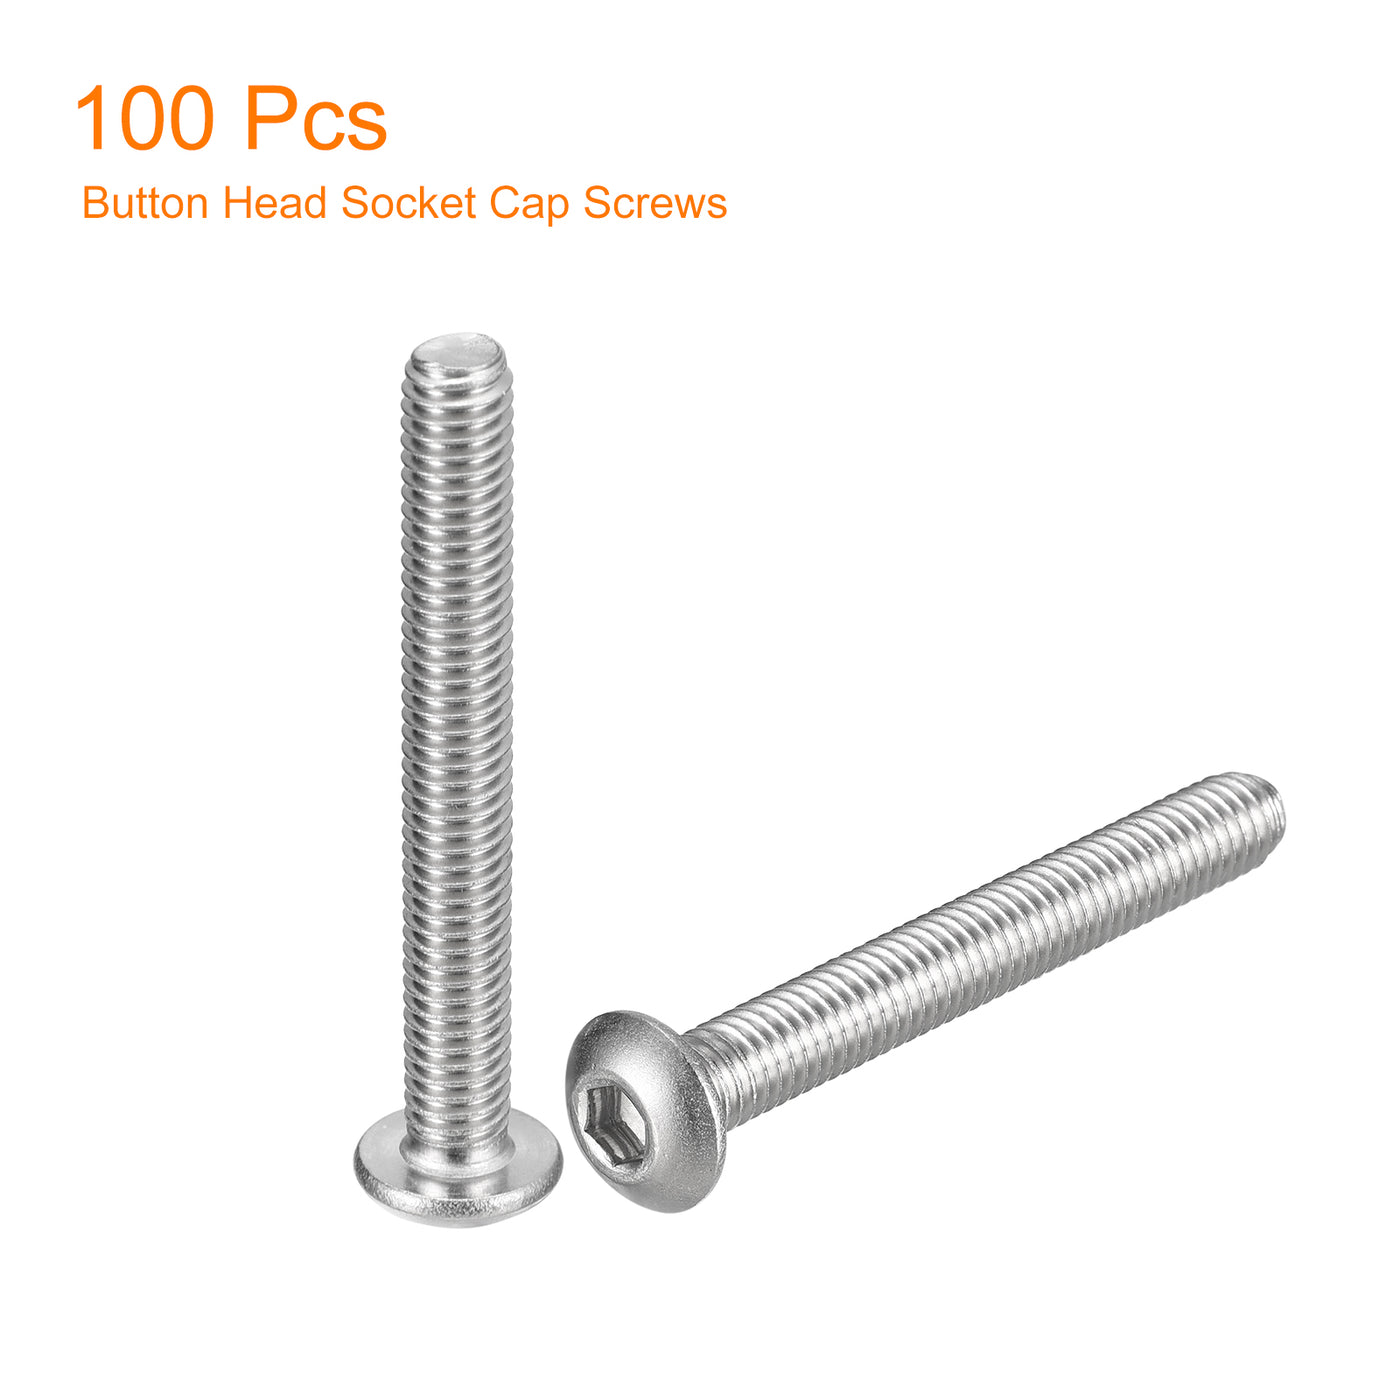 uxcell Uxcell #10-32x1-1/2" Button Head Socket Cap Screws, 100pcs 304 Stainless Steel Screws